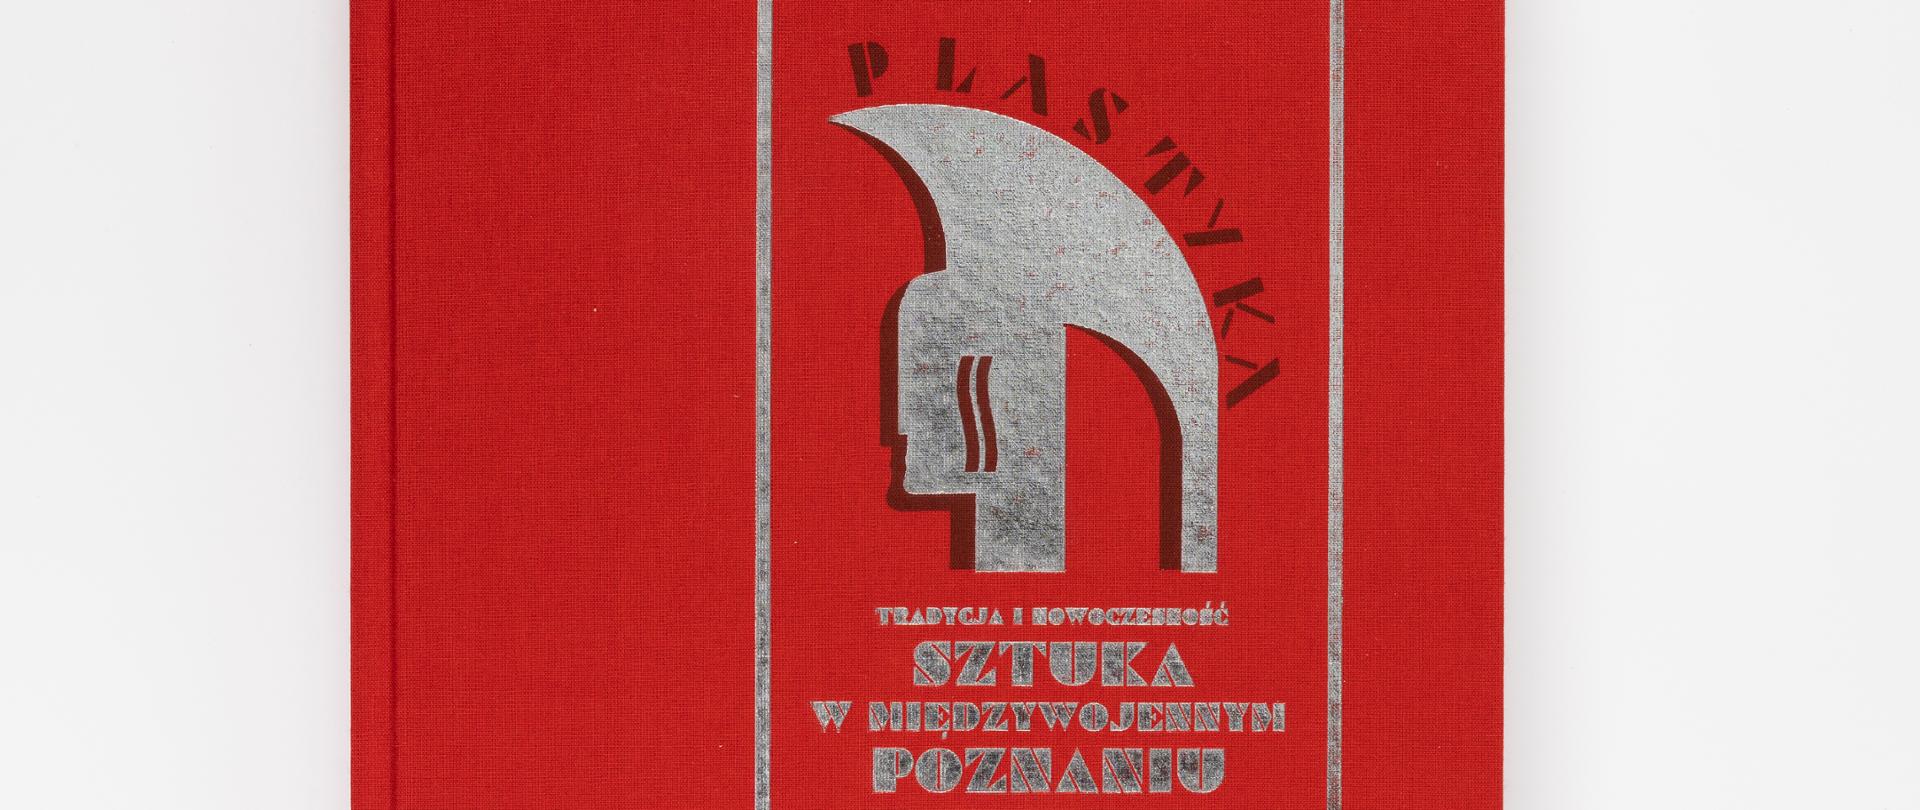 Plastyka - katalog 